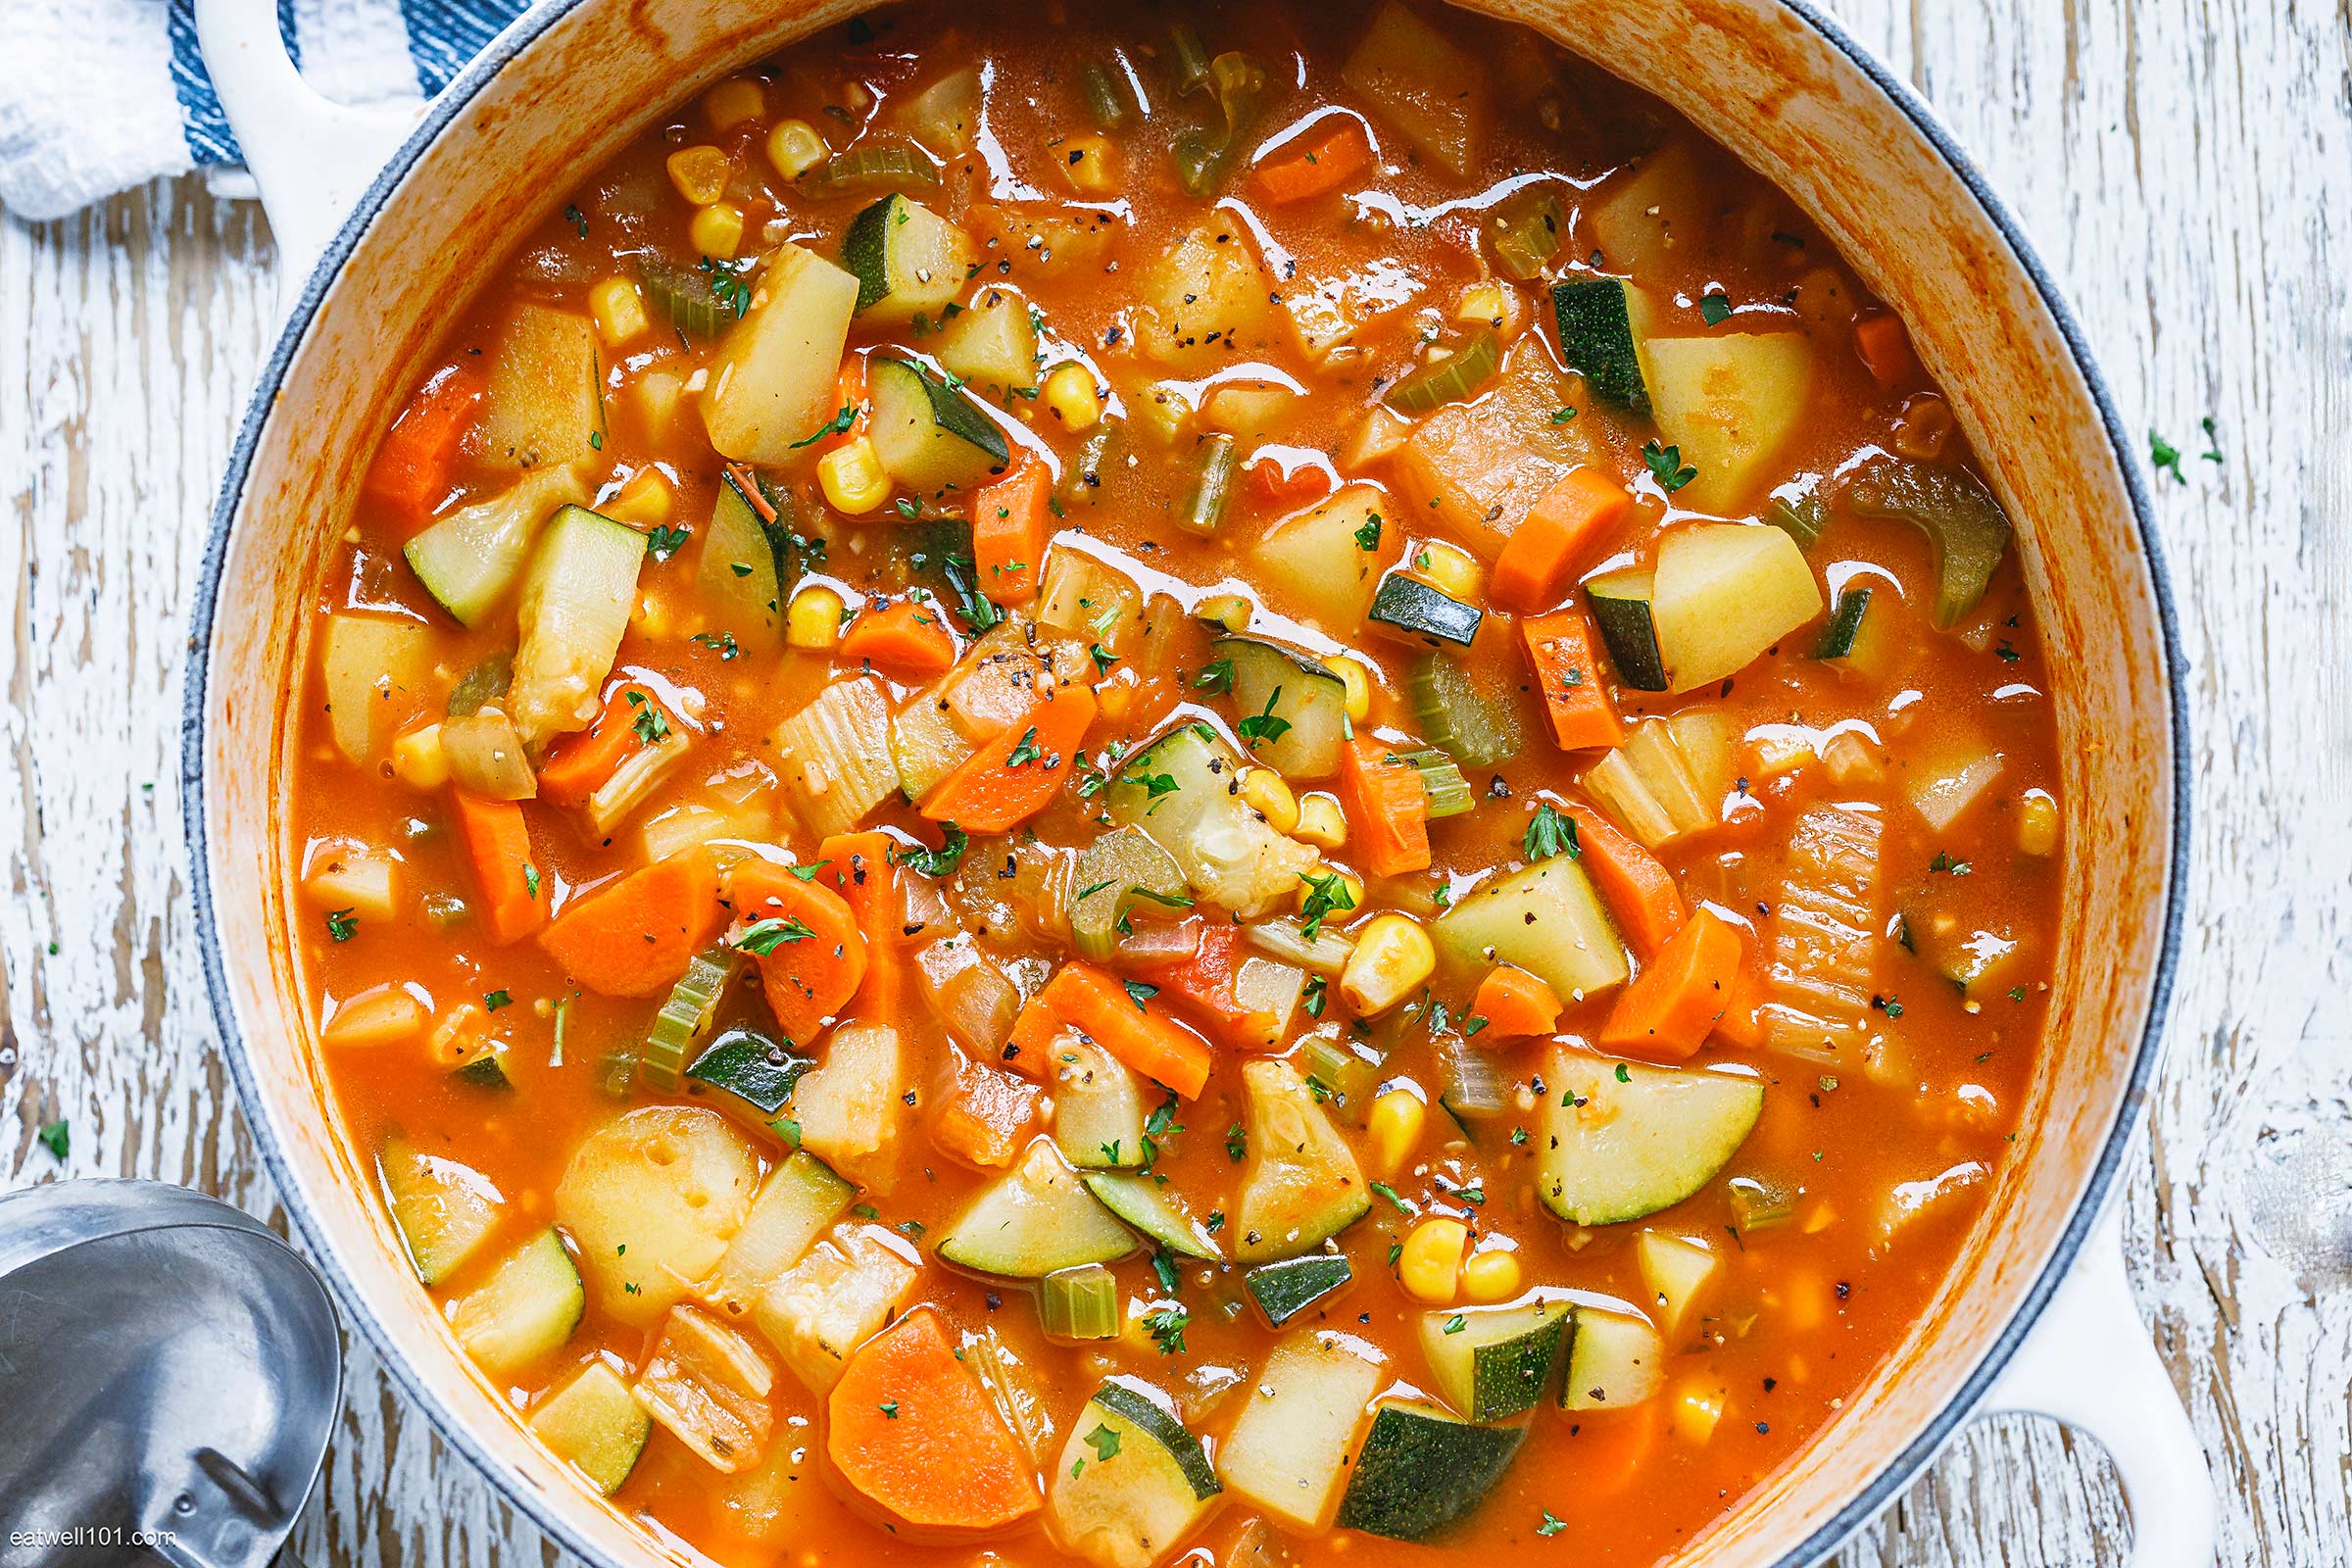 https://www.eatwell101.com/wp-content/uploads/2022/01/Vegetable-Soup-recipe-2.jpg